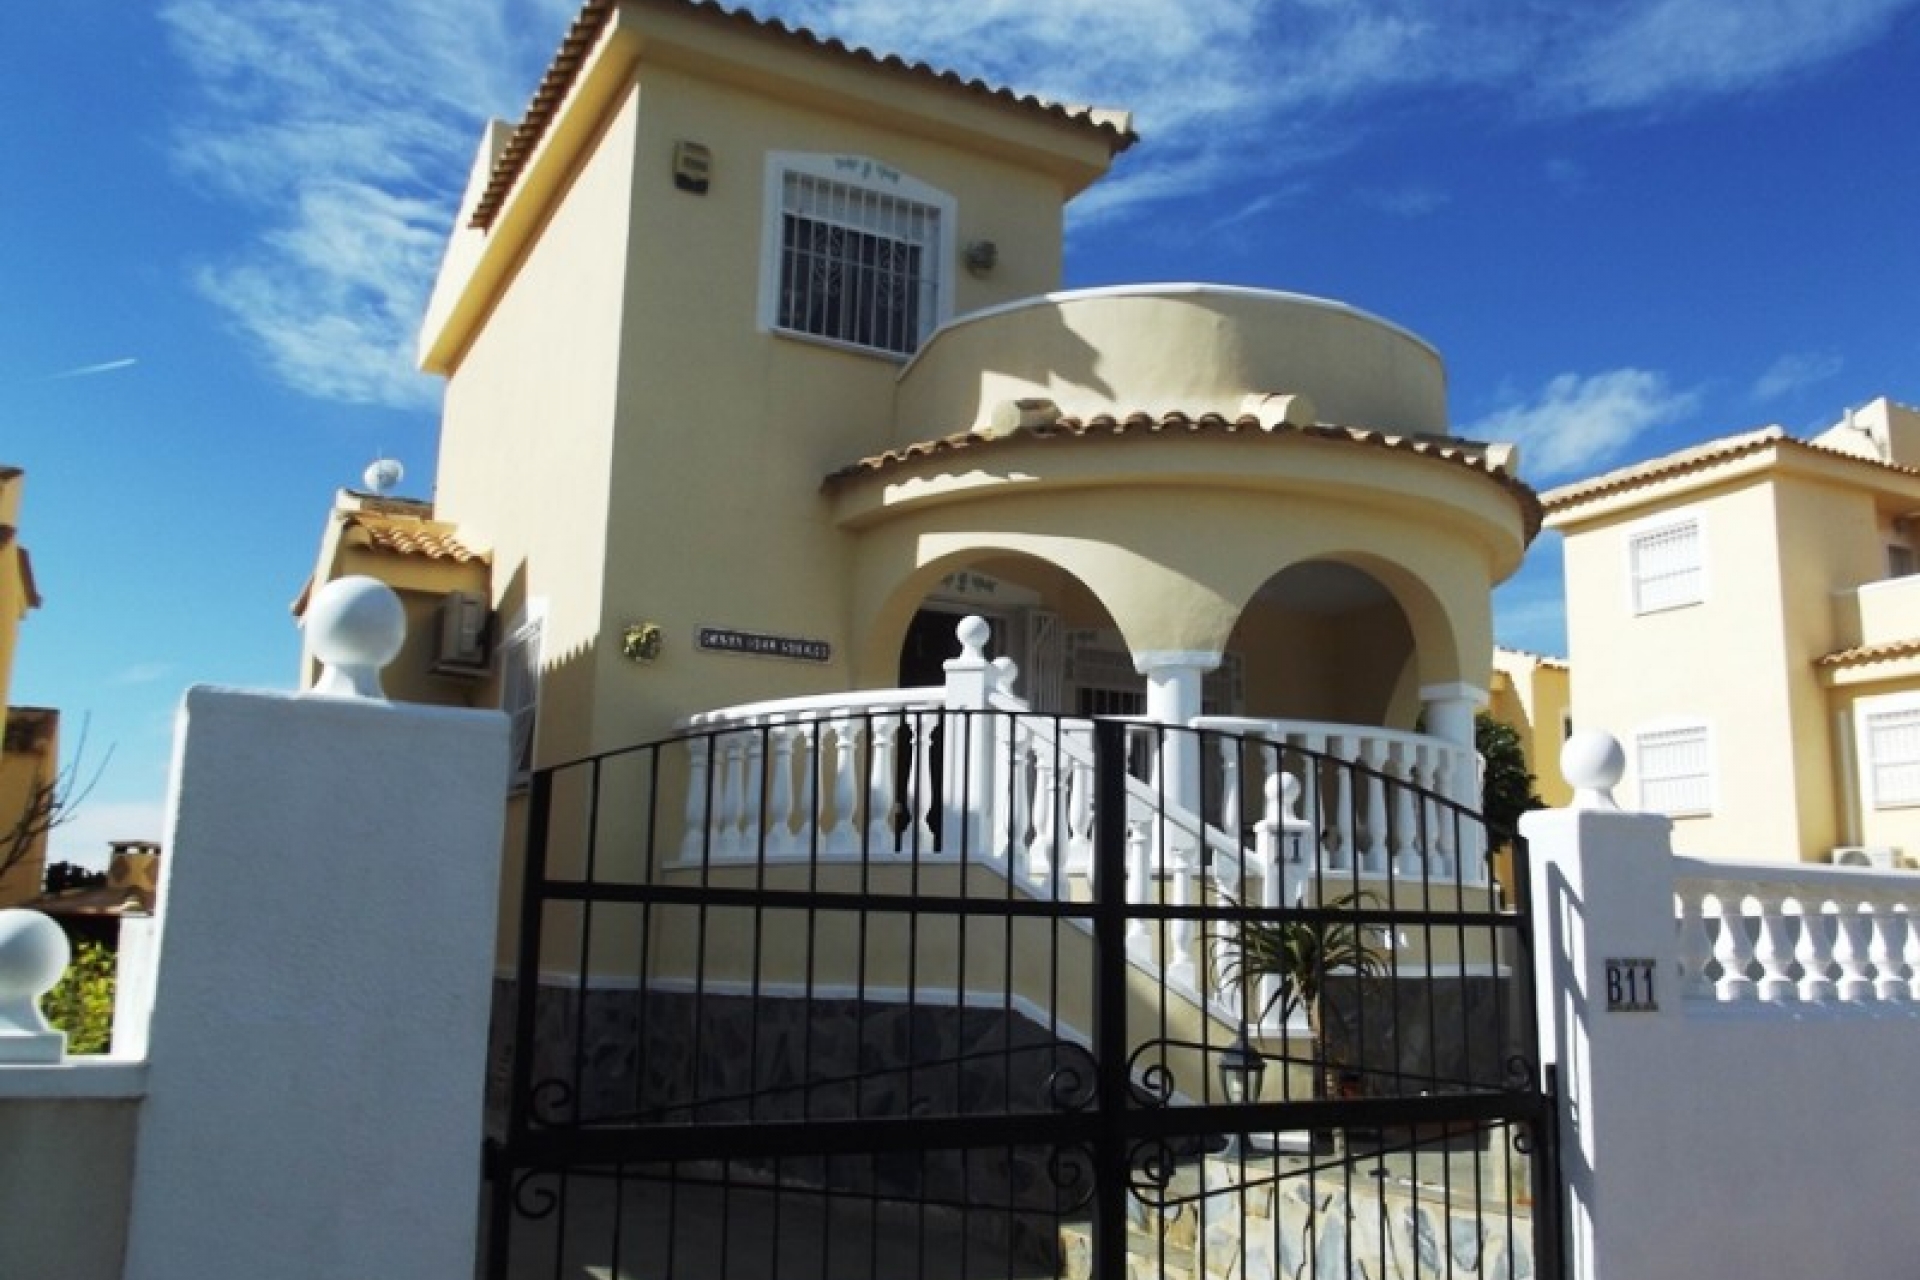 or sale cheap, bargin property in Lo Pepin, Ciudad Quesada for sale close to ciudad quesada on Spains Costa Blanca.